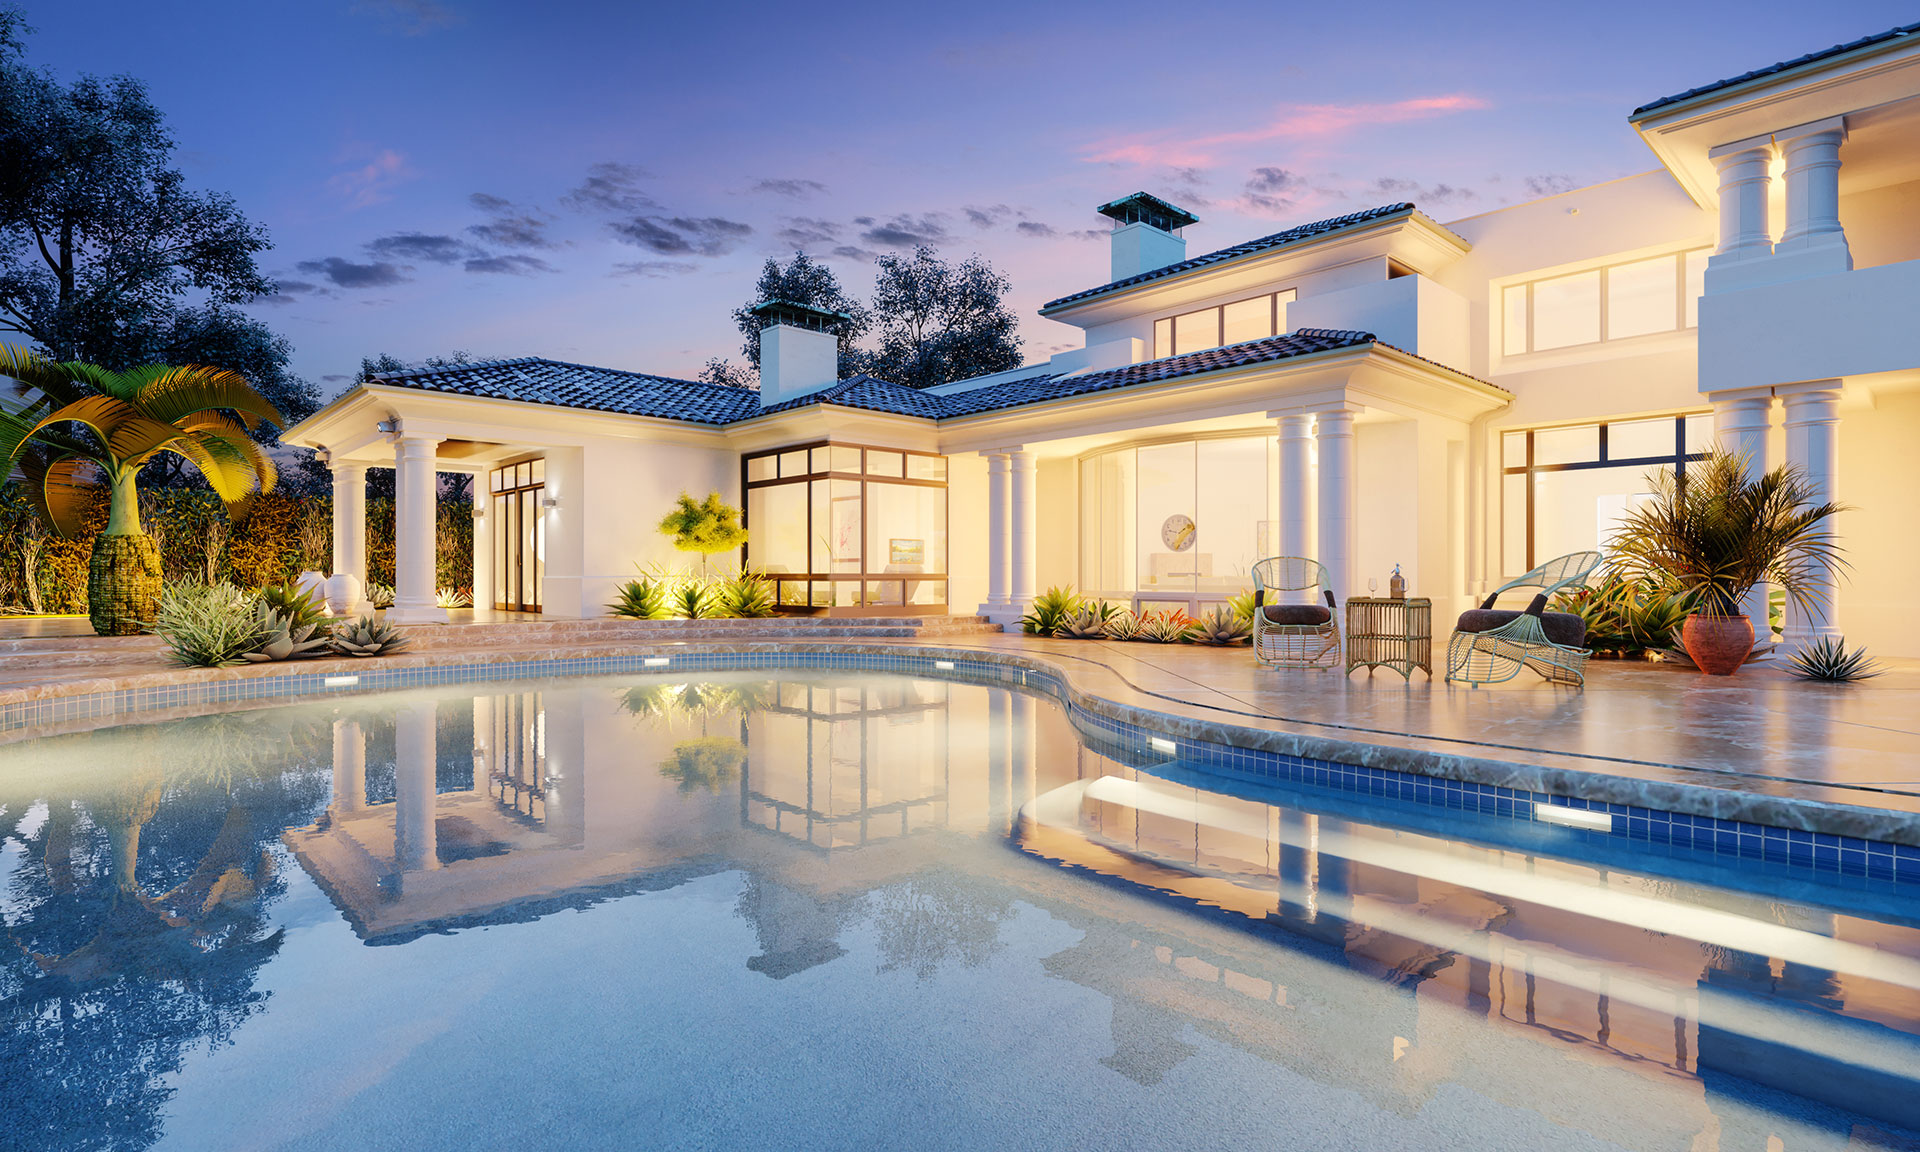 Luxury Florida Keys Real Estate for Rent